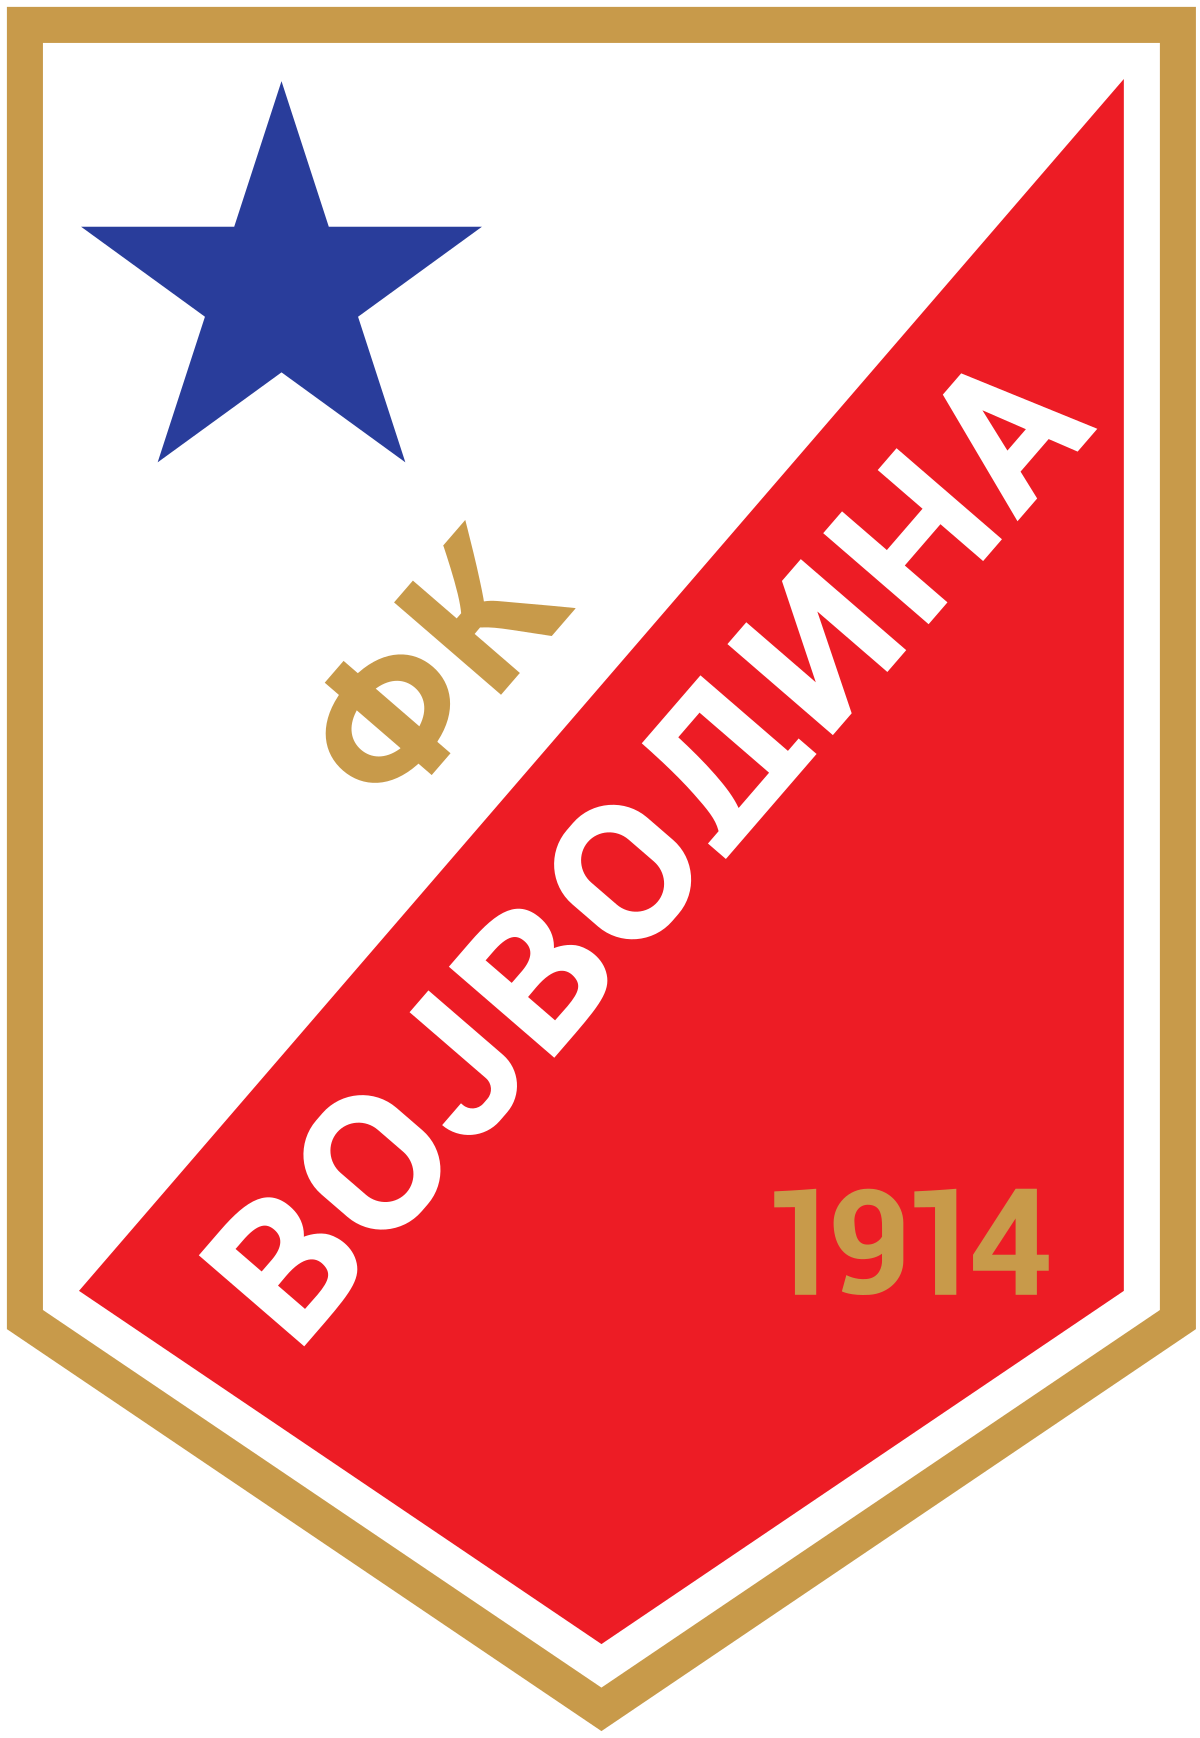 Logo Vojvodina Novi Sad